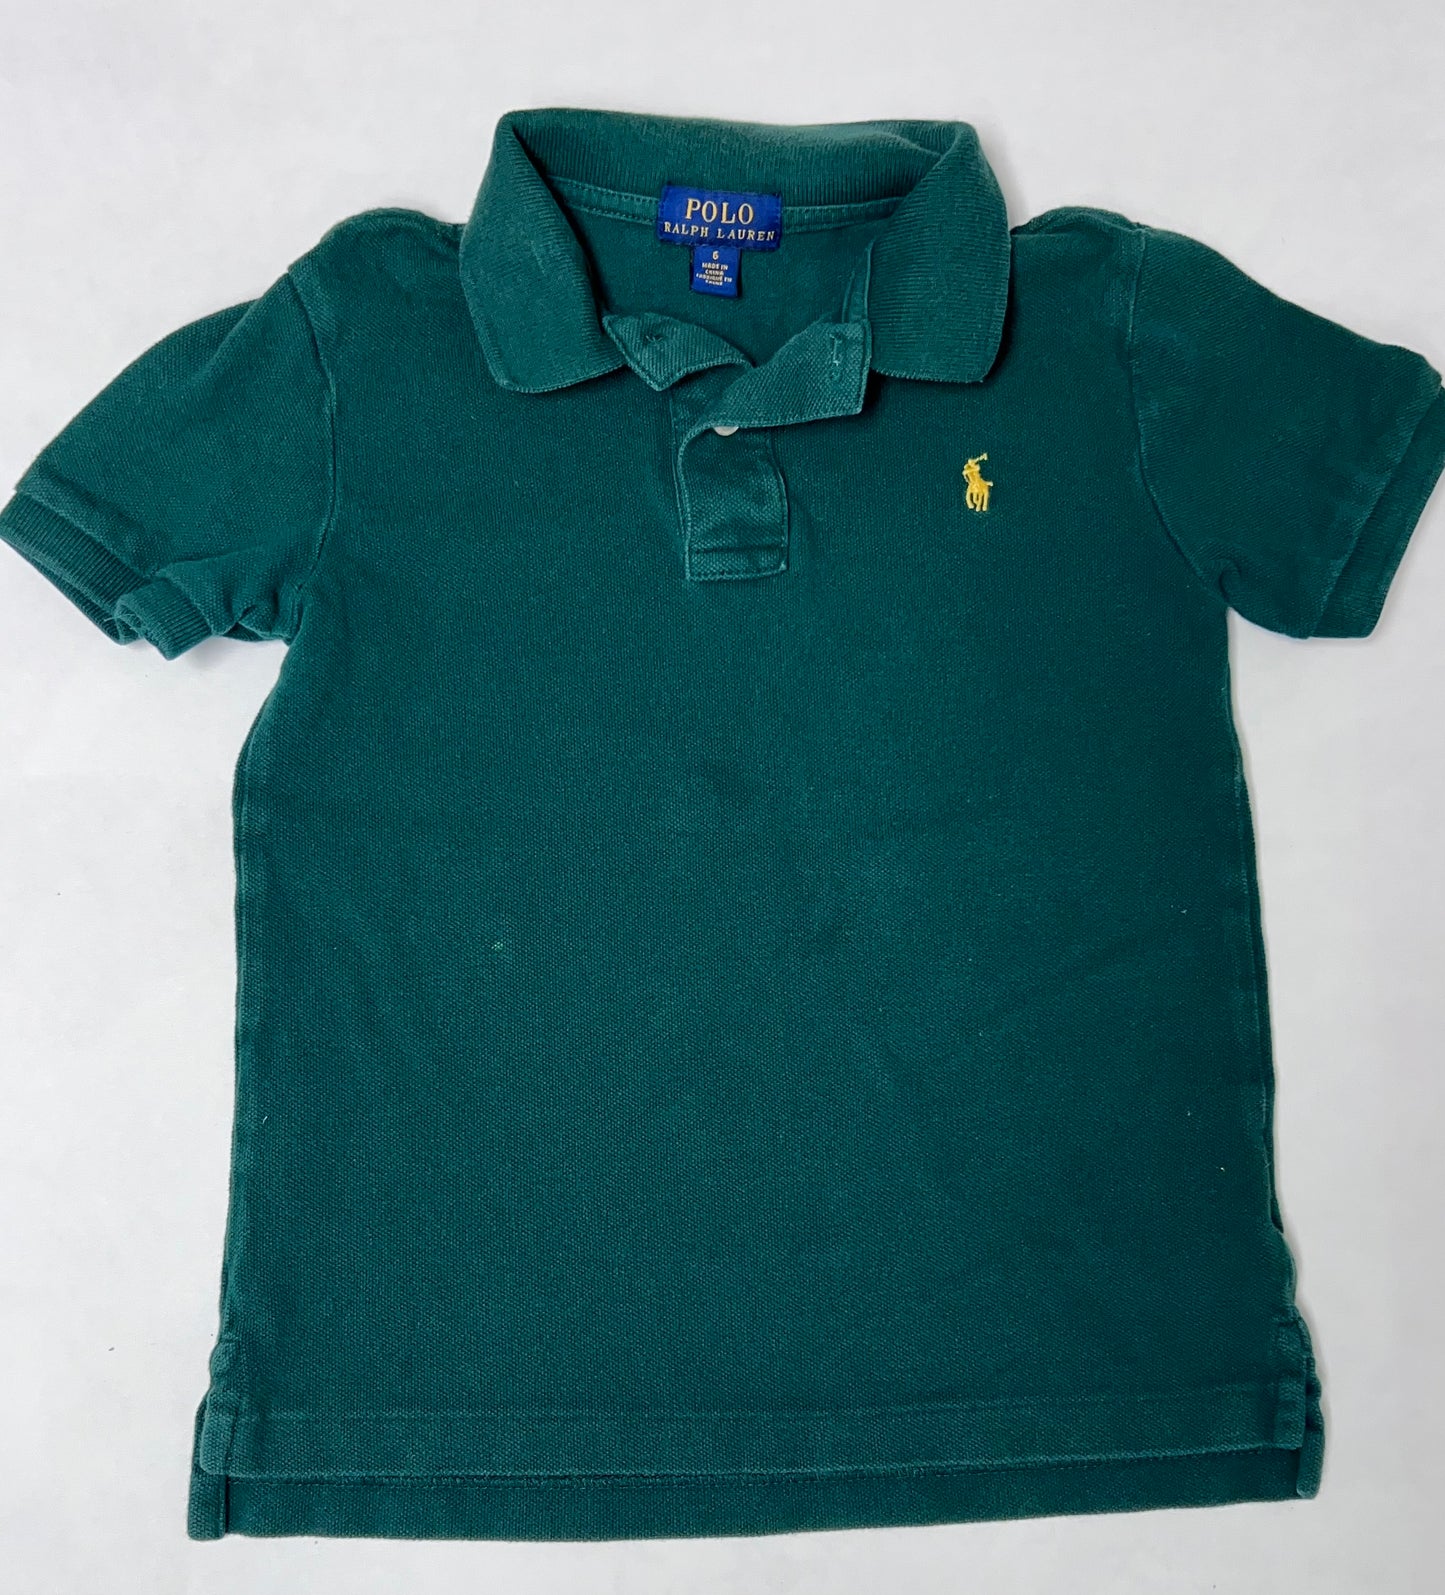 Size 6 boys dark green polo (Ralph Lauren), GUC (see description for flaws)